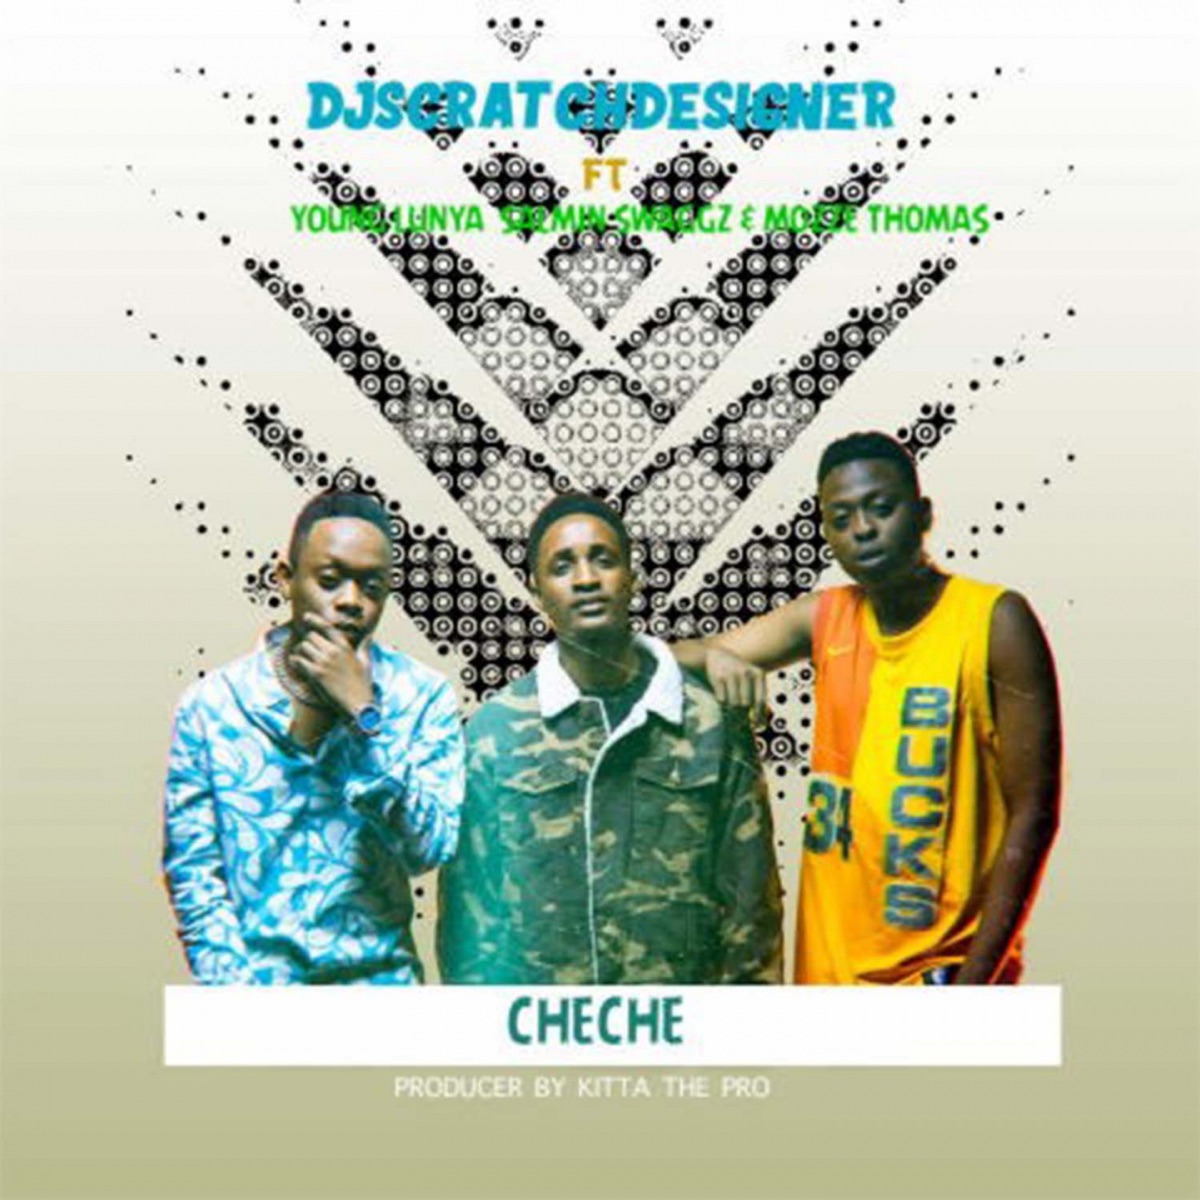 Cheche (feat. Young Lunya, Salmin Swaggz & Mozeh Thomas) - Single - Album  by DJ Scratch Designer - Apple Music